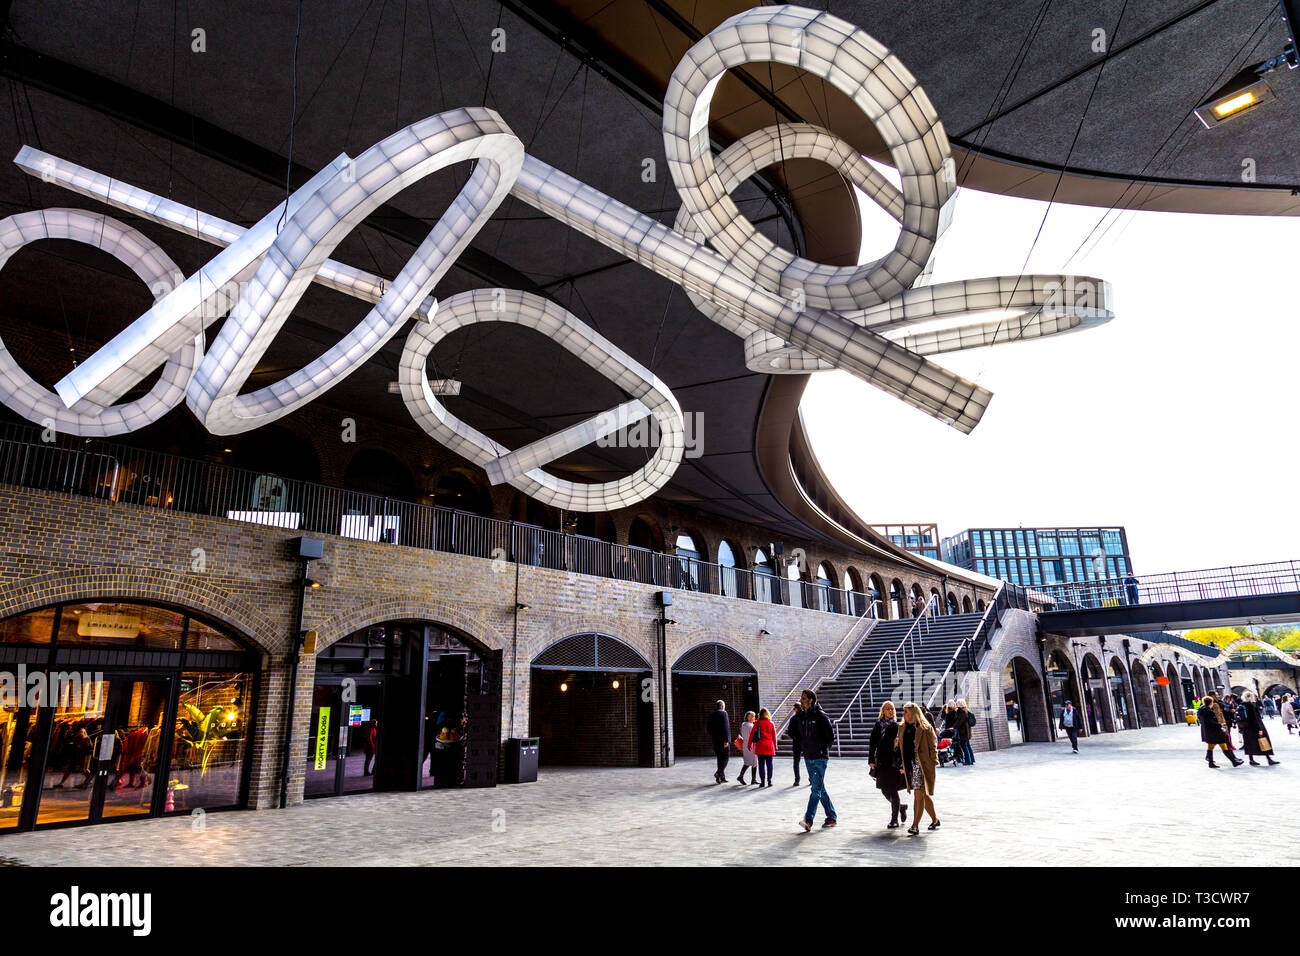 A giant suspended sculpture 'Space Frames' by Studio Mieke Meijerin in Coal Drops Yard, Kings Cross, London, UK Stock Photo